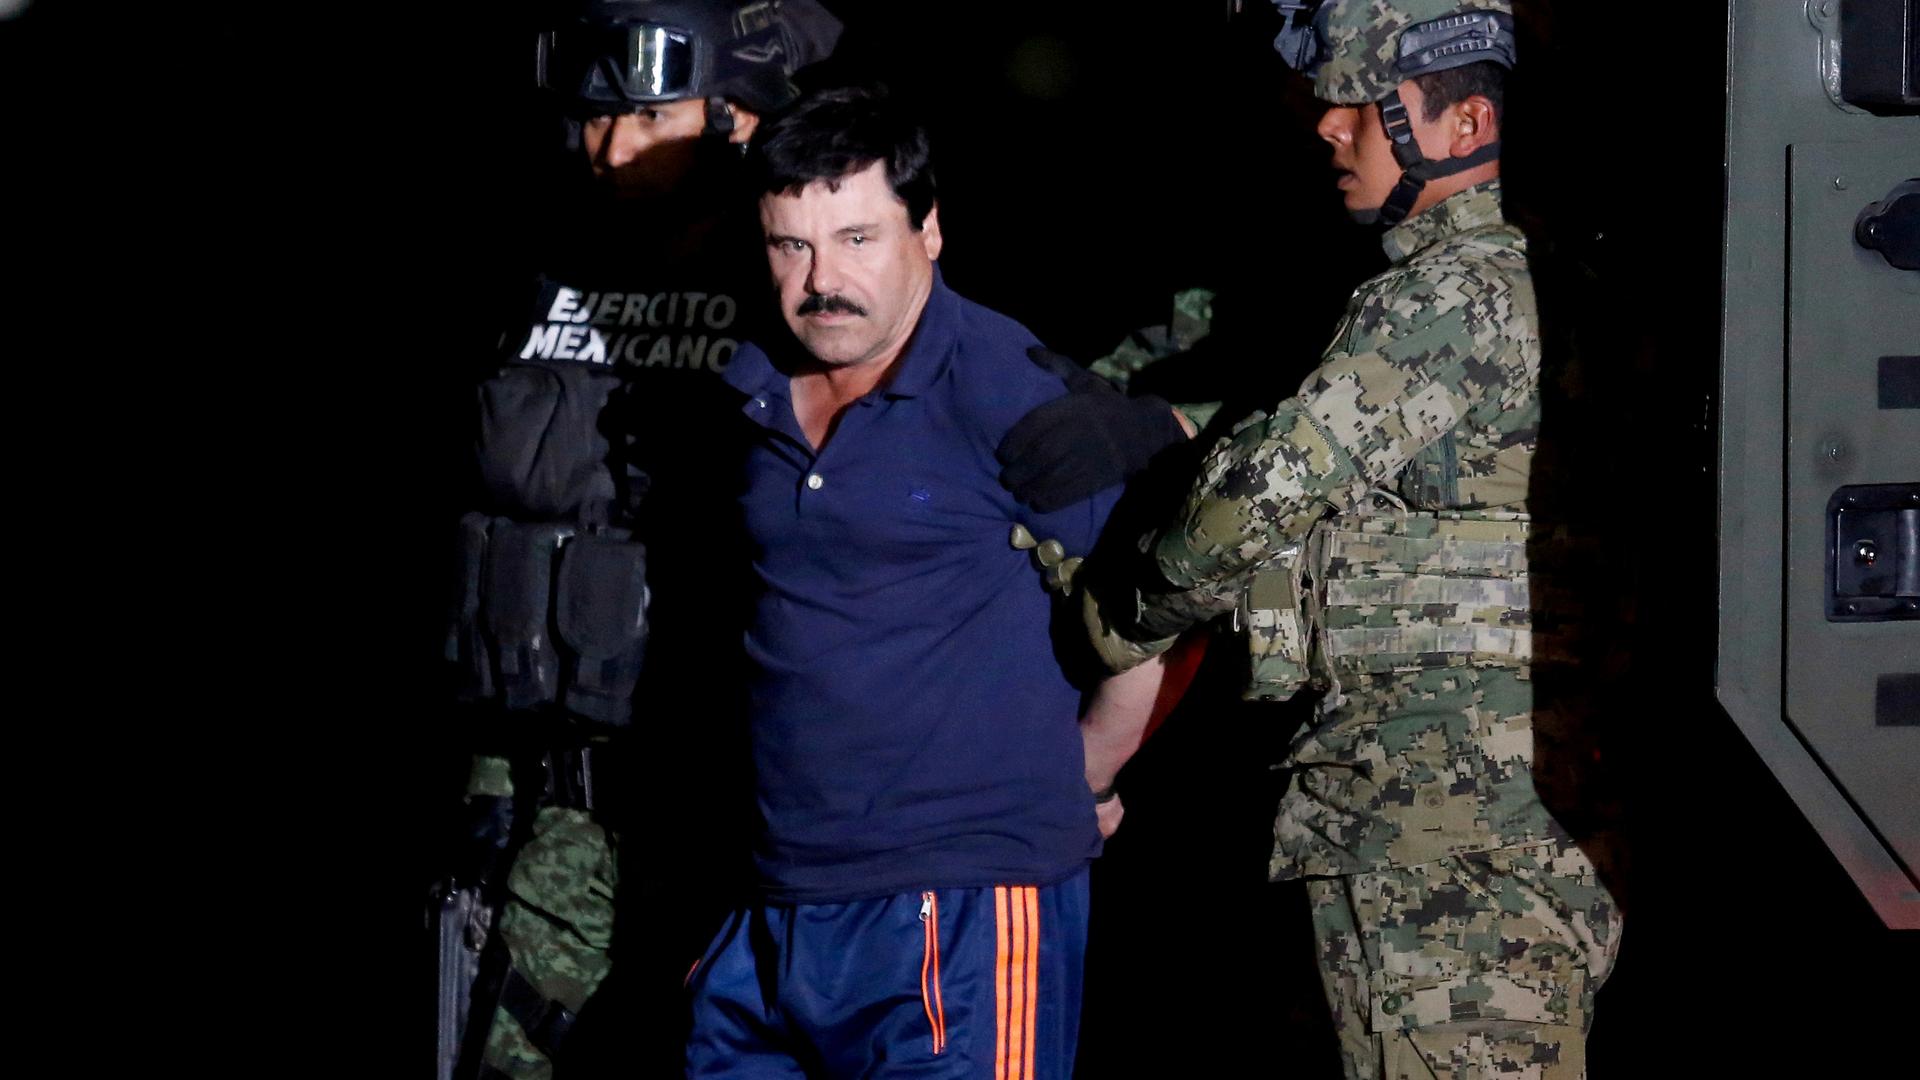 "El Chapo" in blue uniform stands near police.